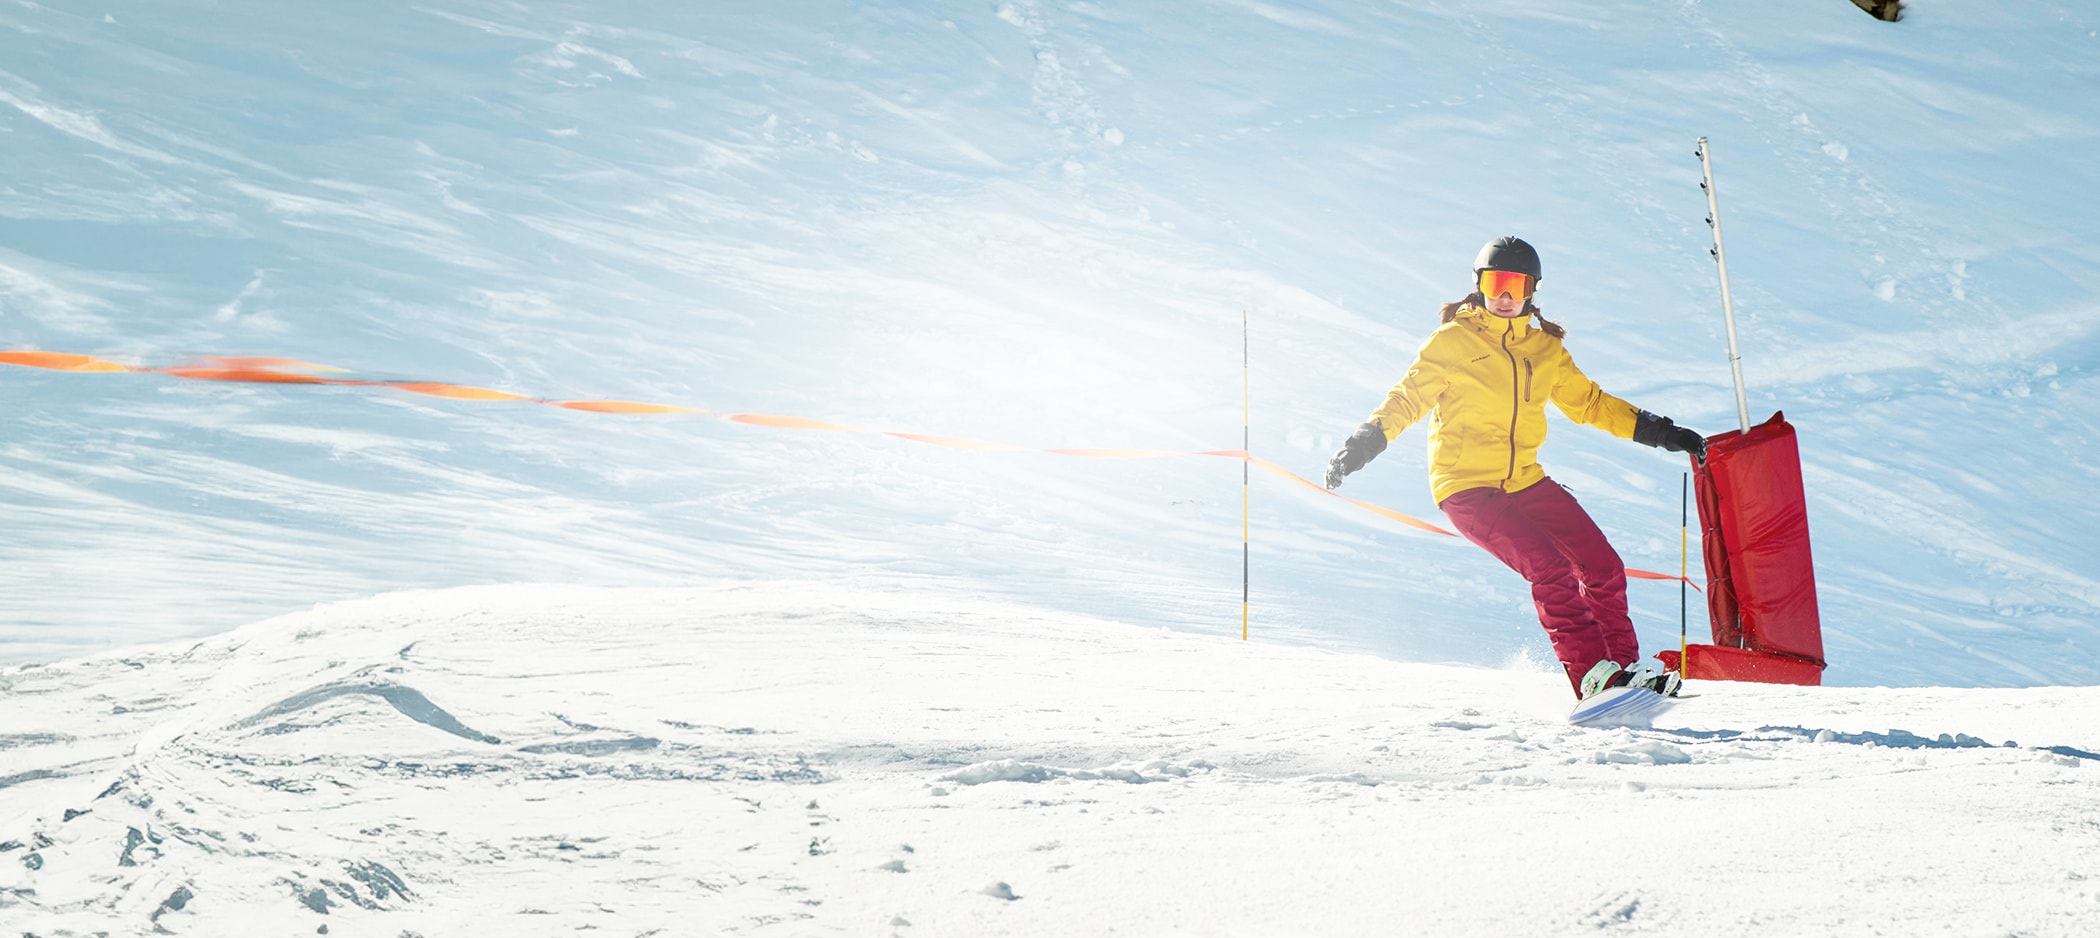 Une personne se relève au ski